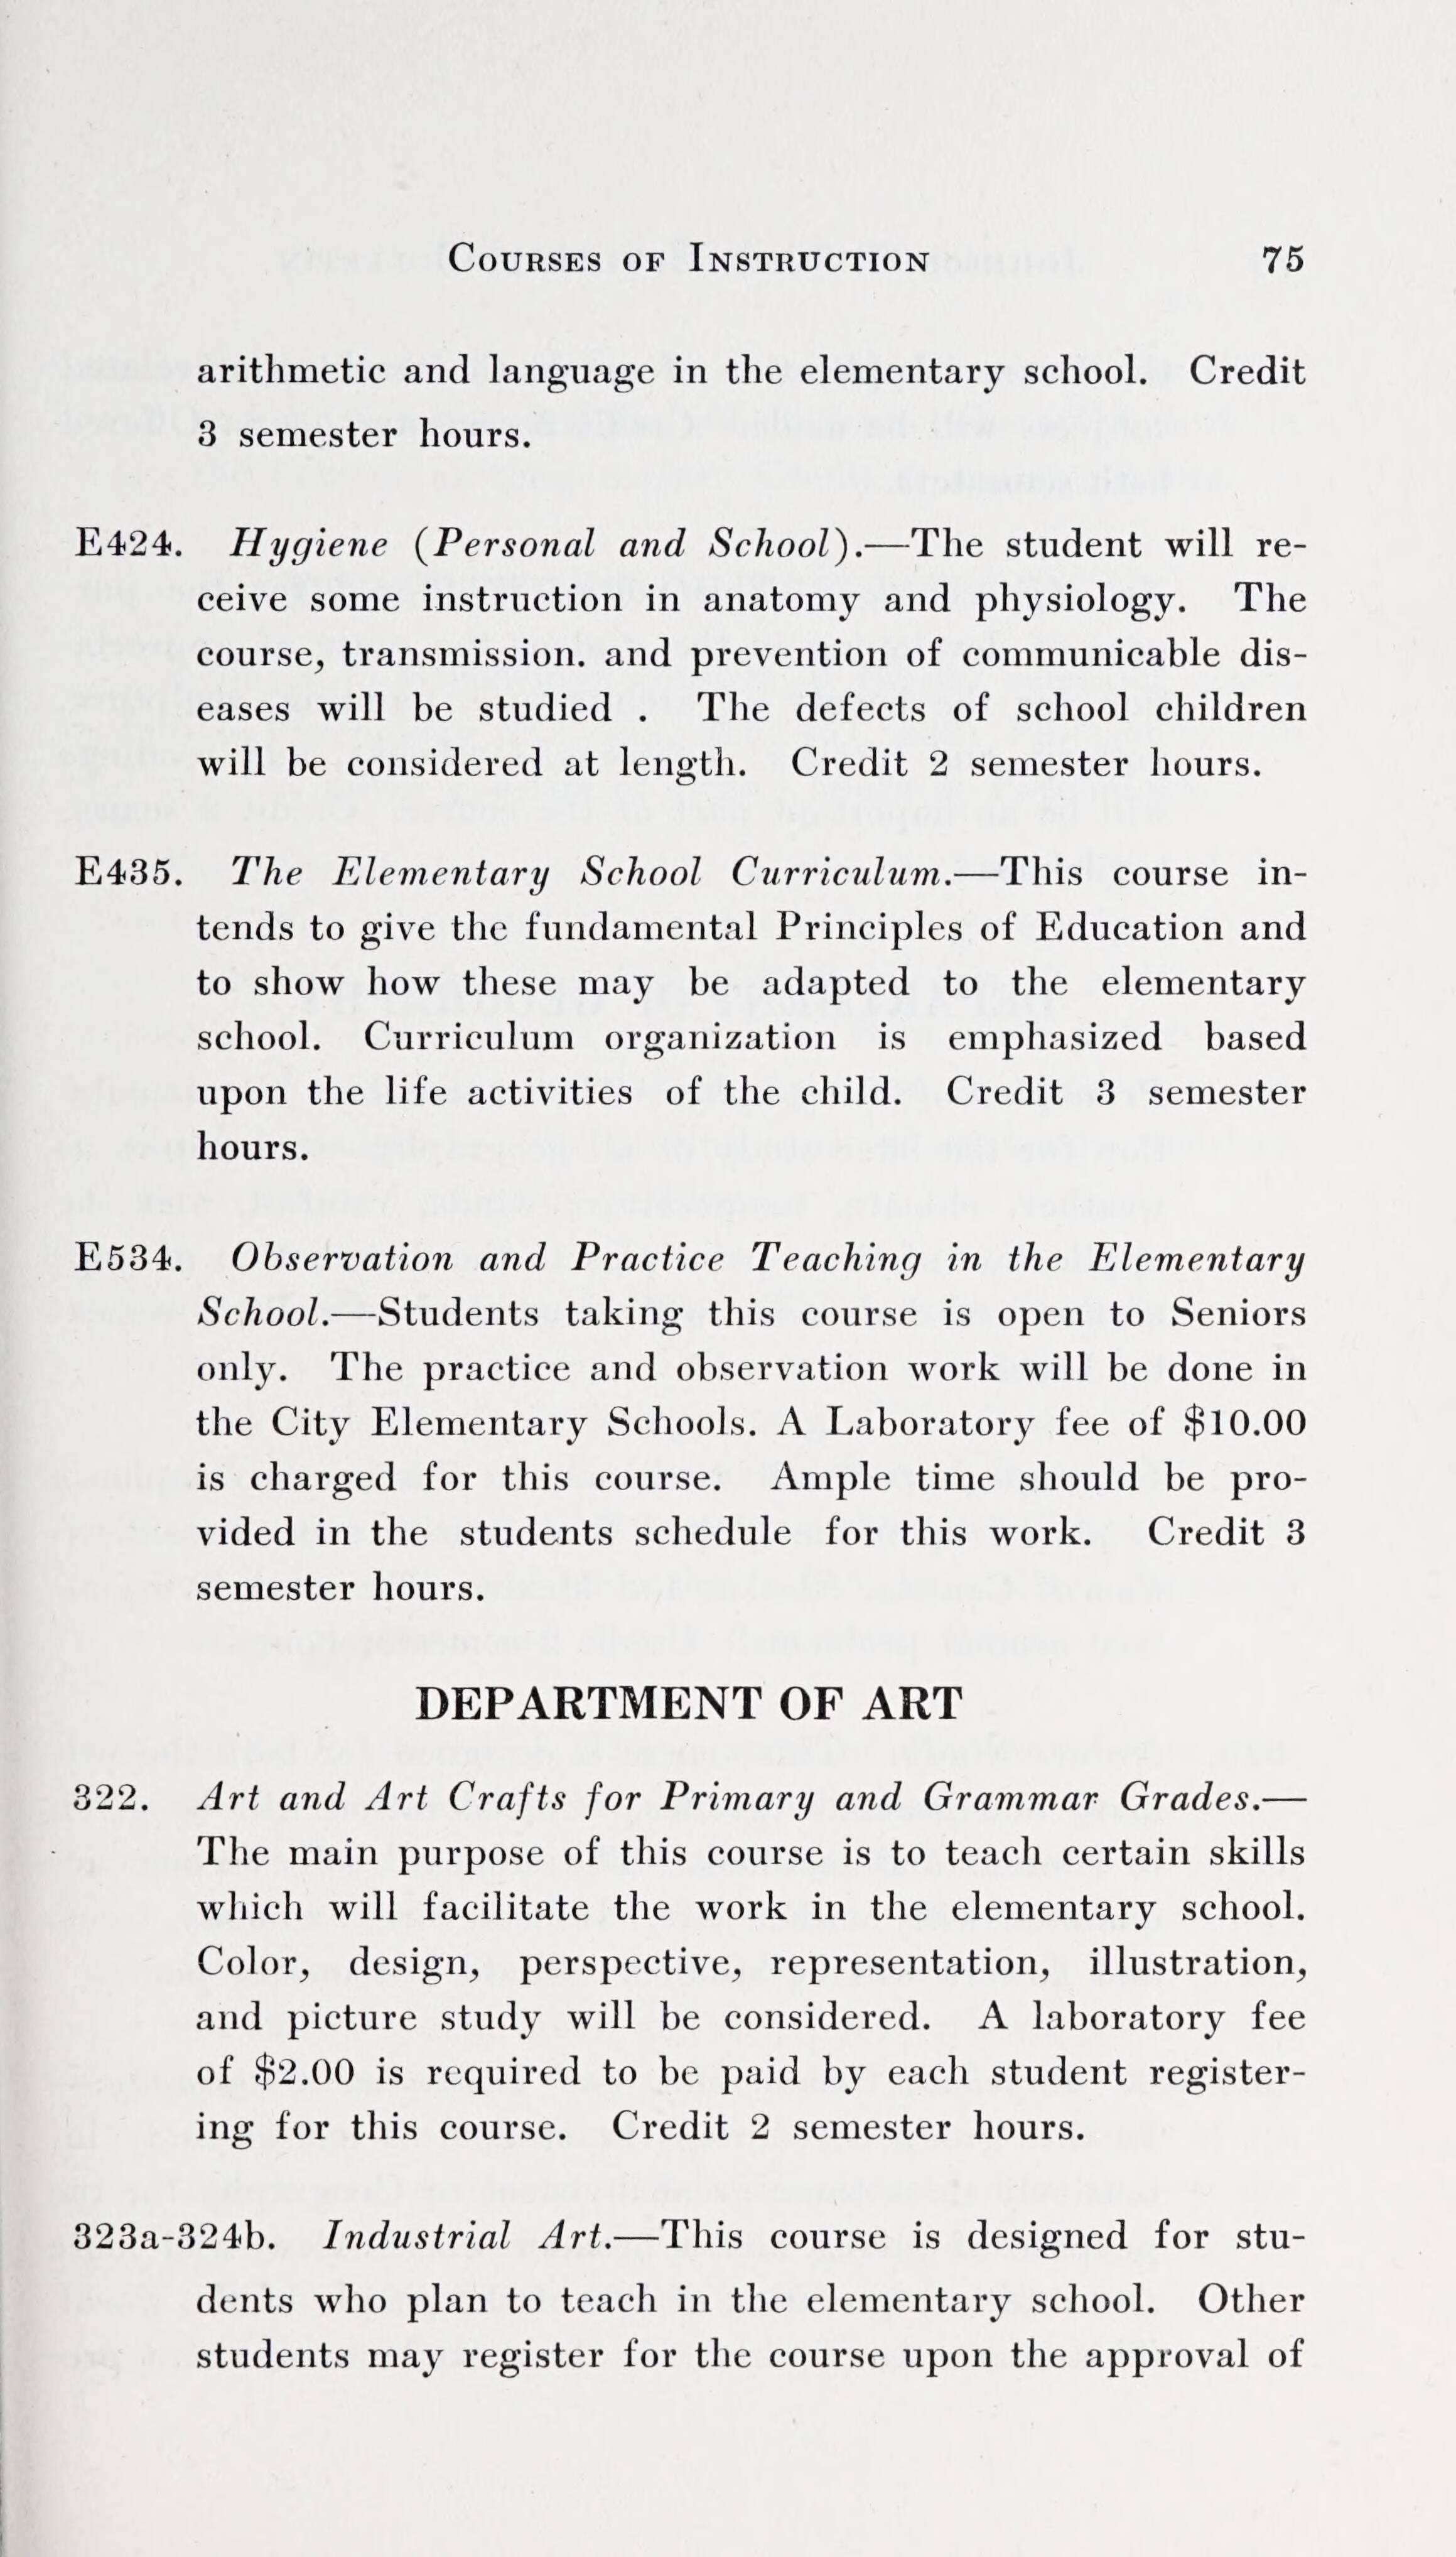 Johnson C. Smith University Bulletin [1938]